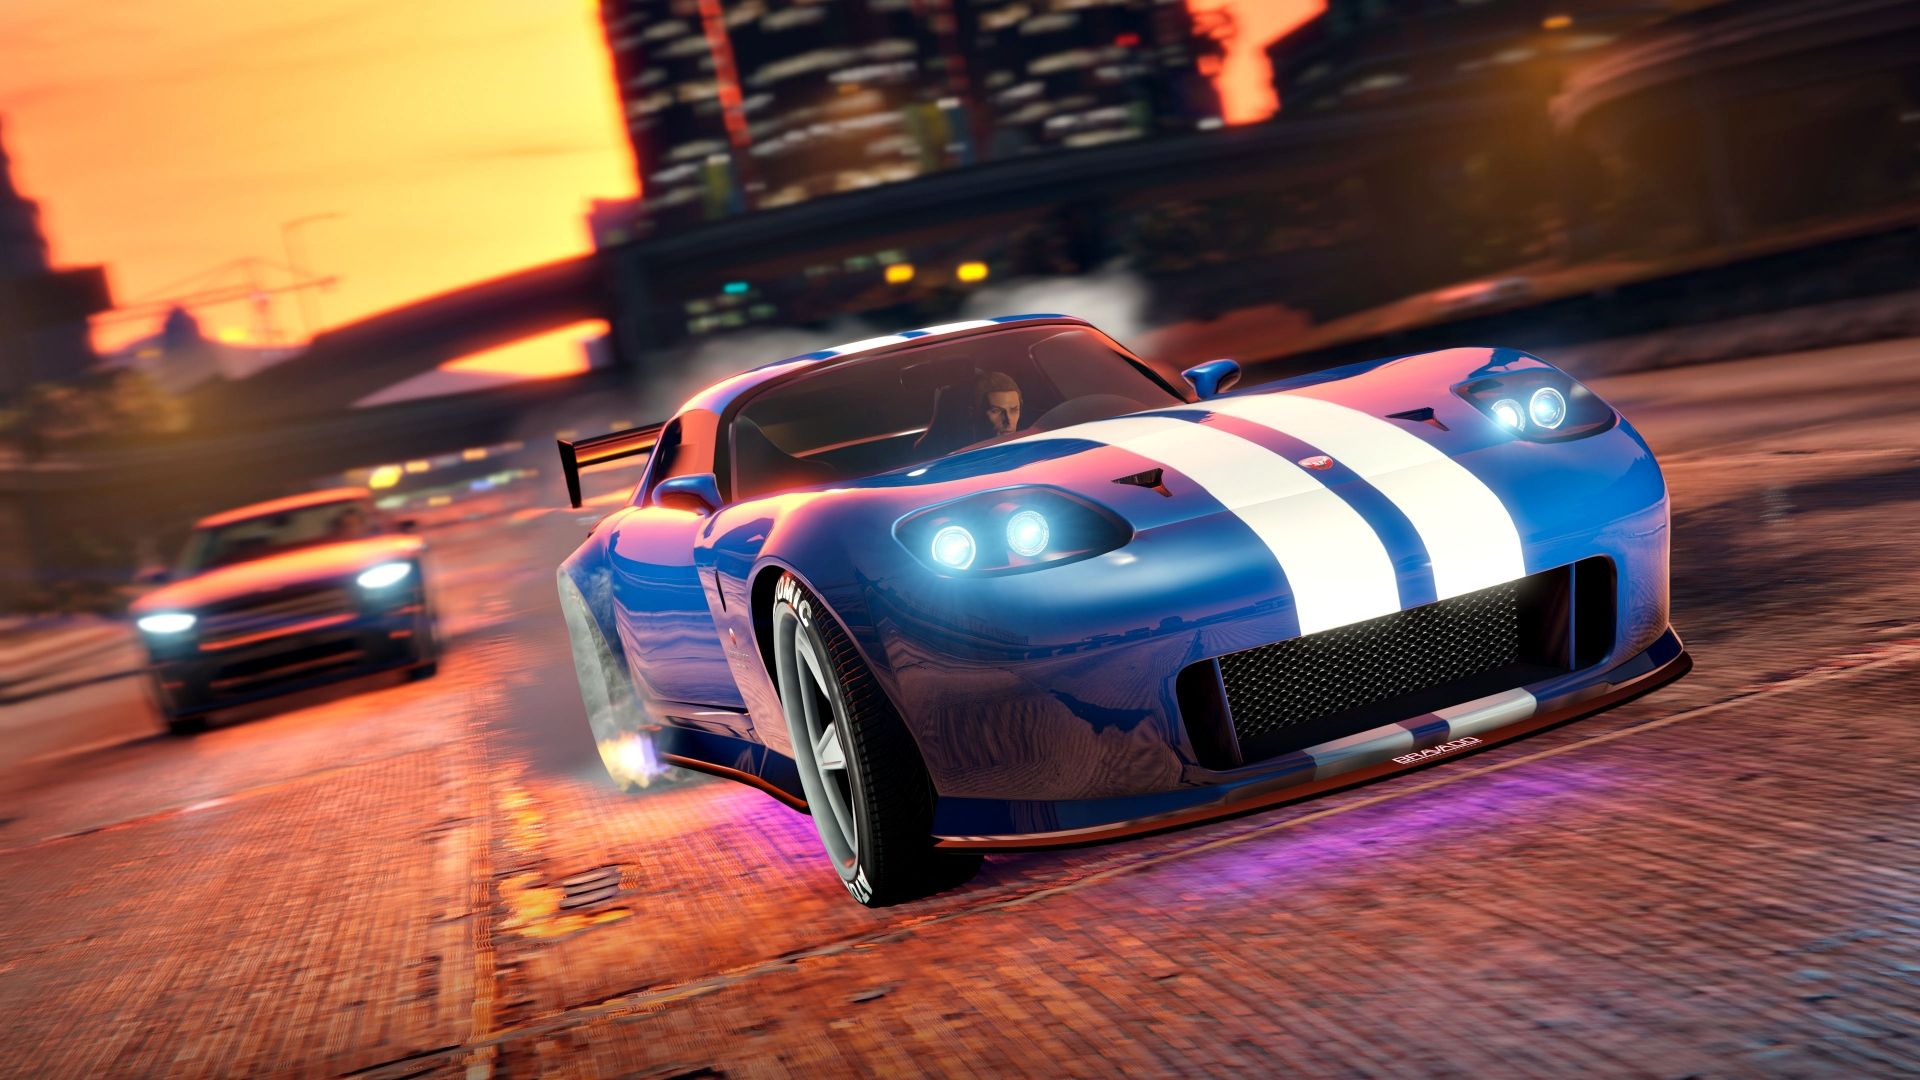 Ranking The 15 Best GTA 5 Vehicle Mods